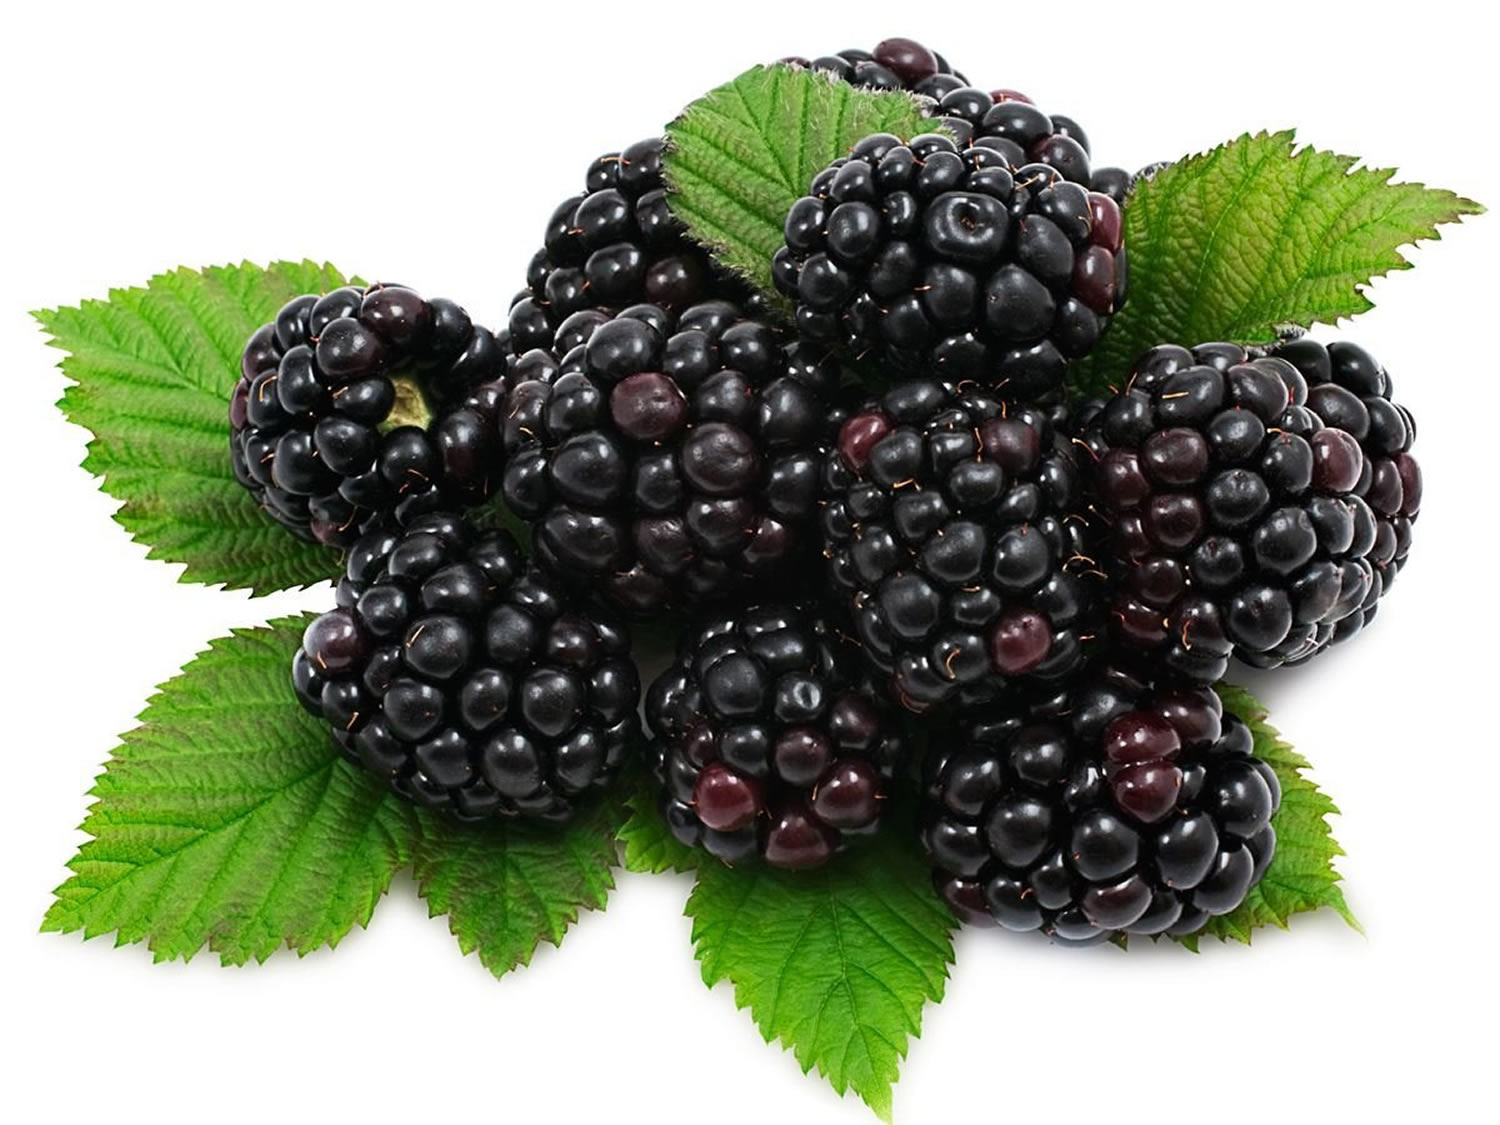 Mulberry Edible Fruitare - Health benefits - Mulberries vs Blackberries